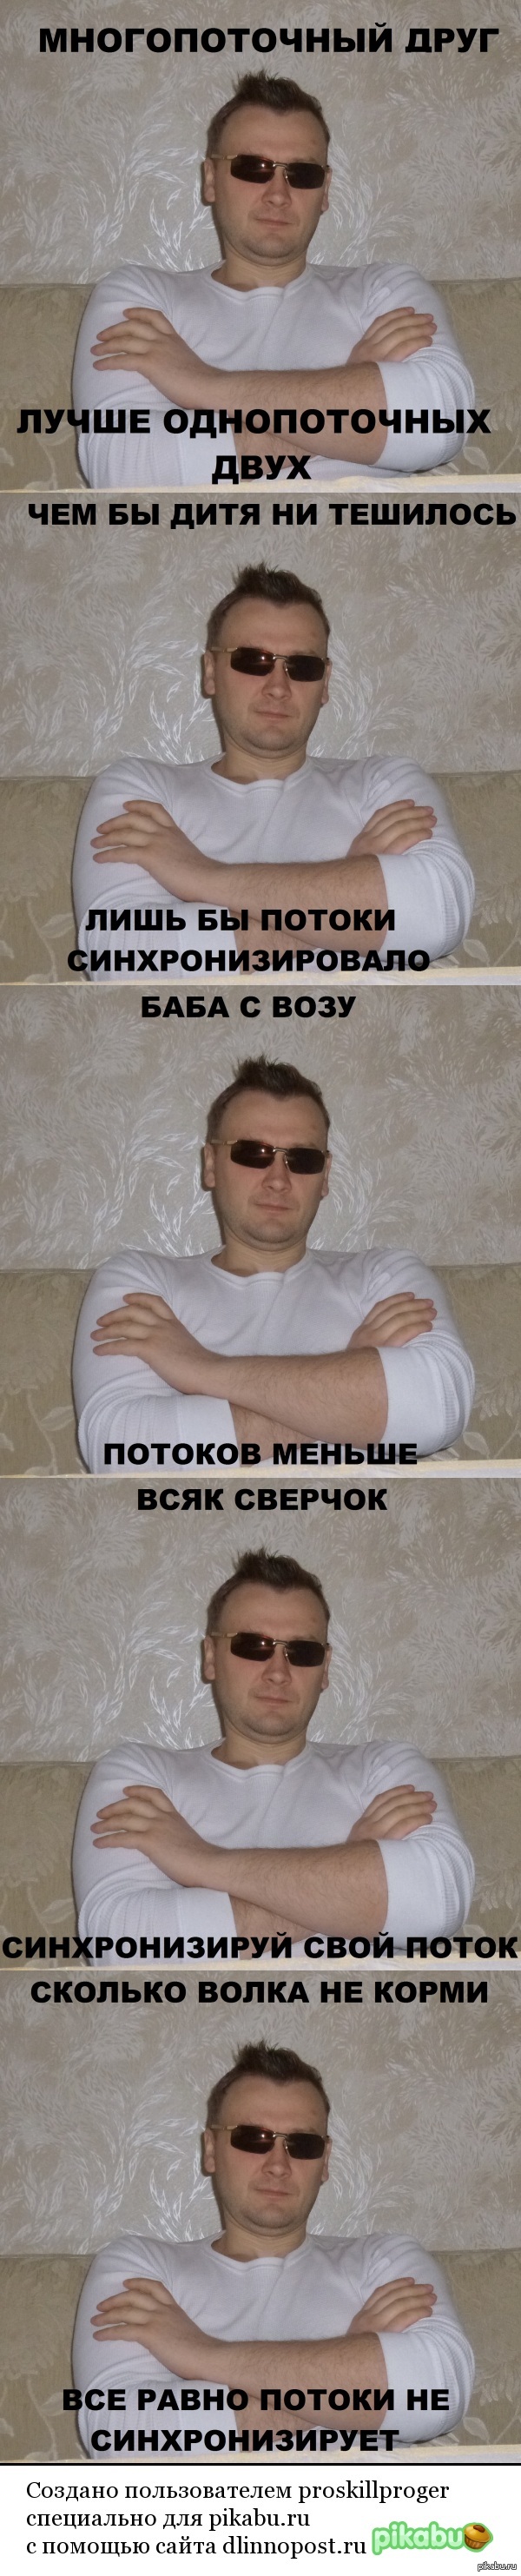    ,    **    <a href="http://pikabu.ru/story/zakonyi_ulits_3027406">http://pikabu.ru/story/_3027406</a>